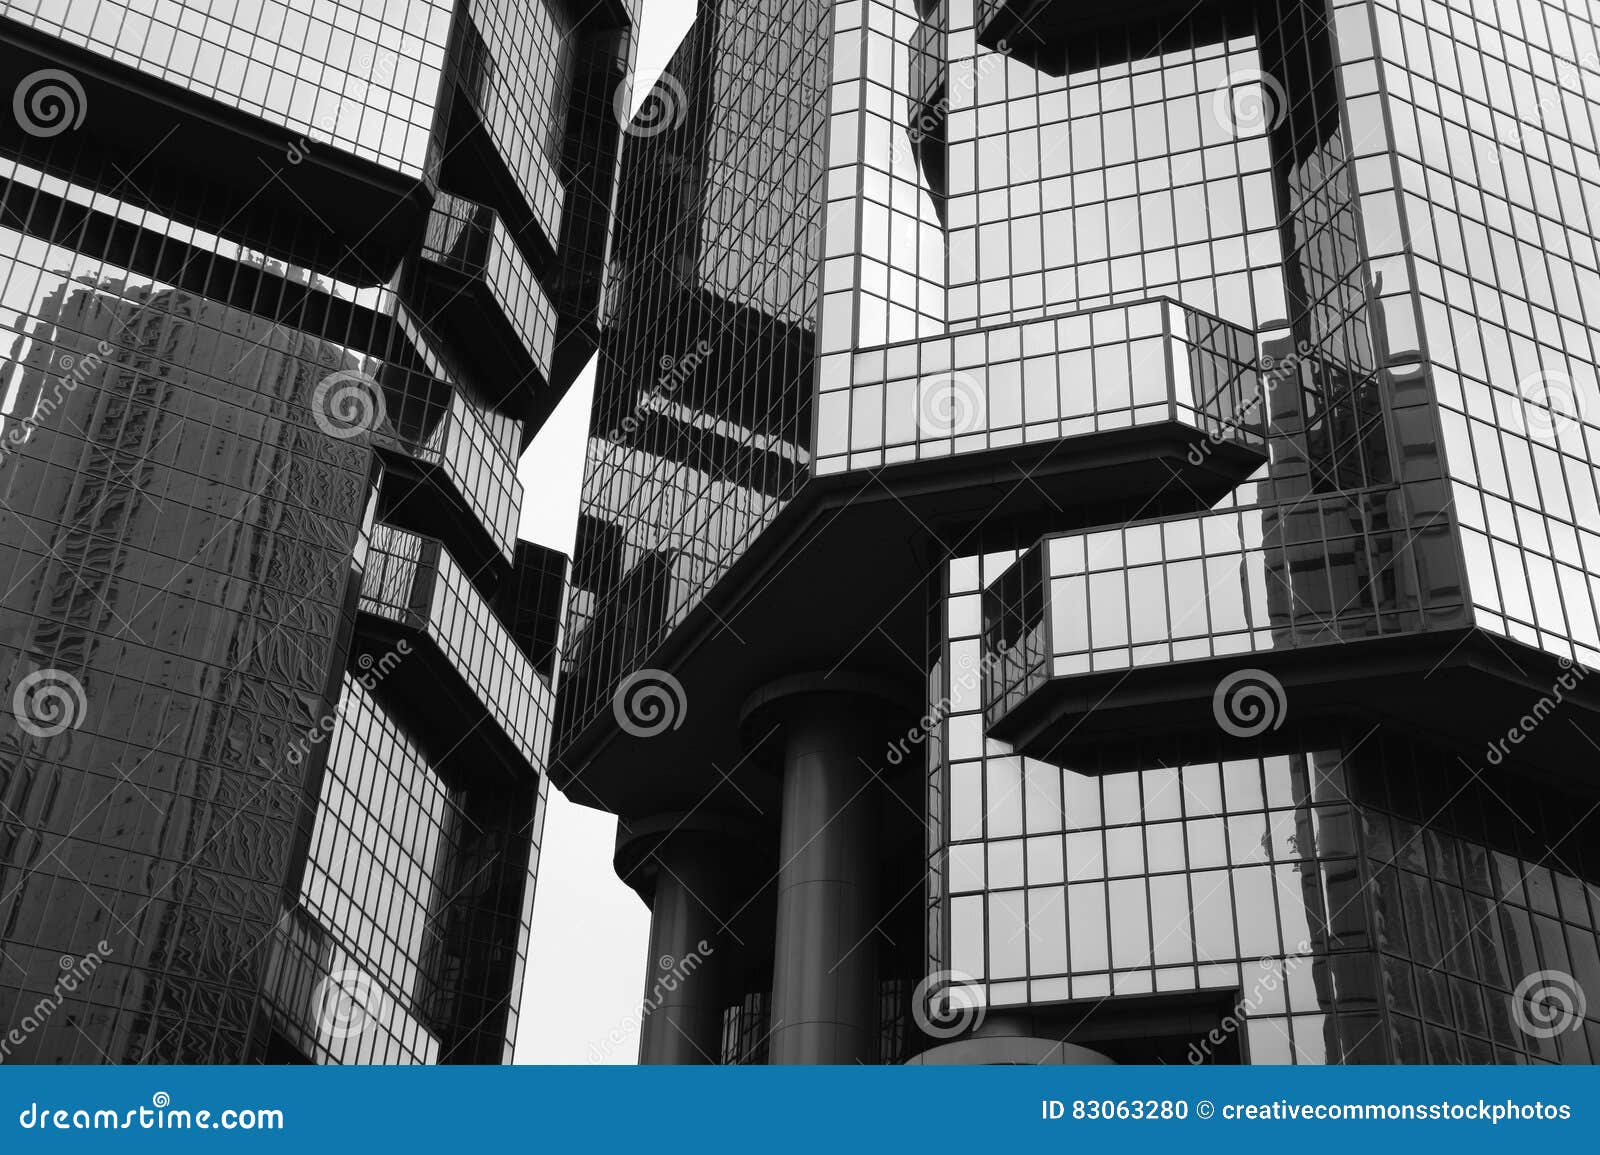 Grayscale photo of man standing near window photo – Free Cloud